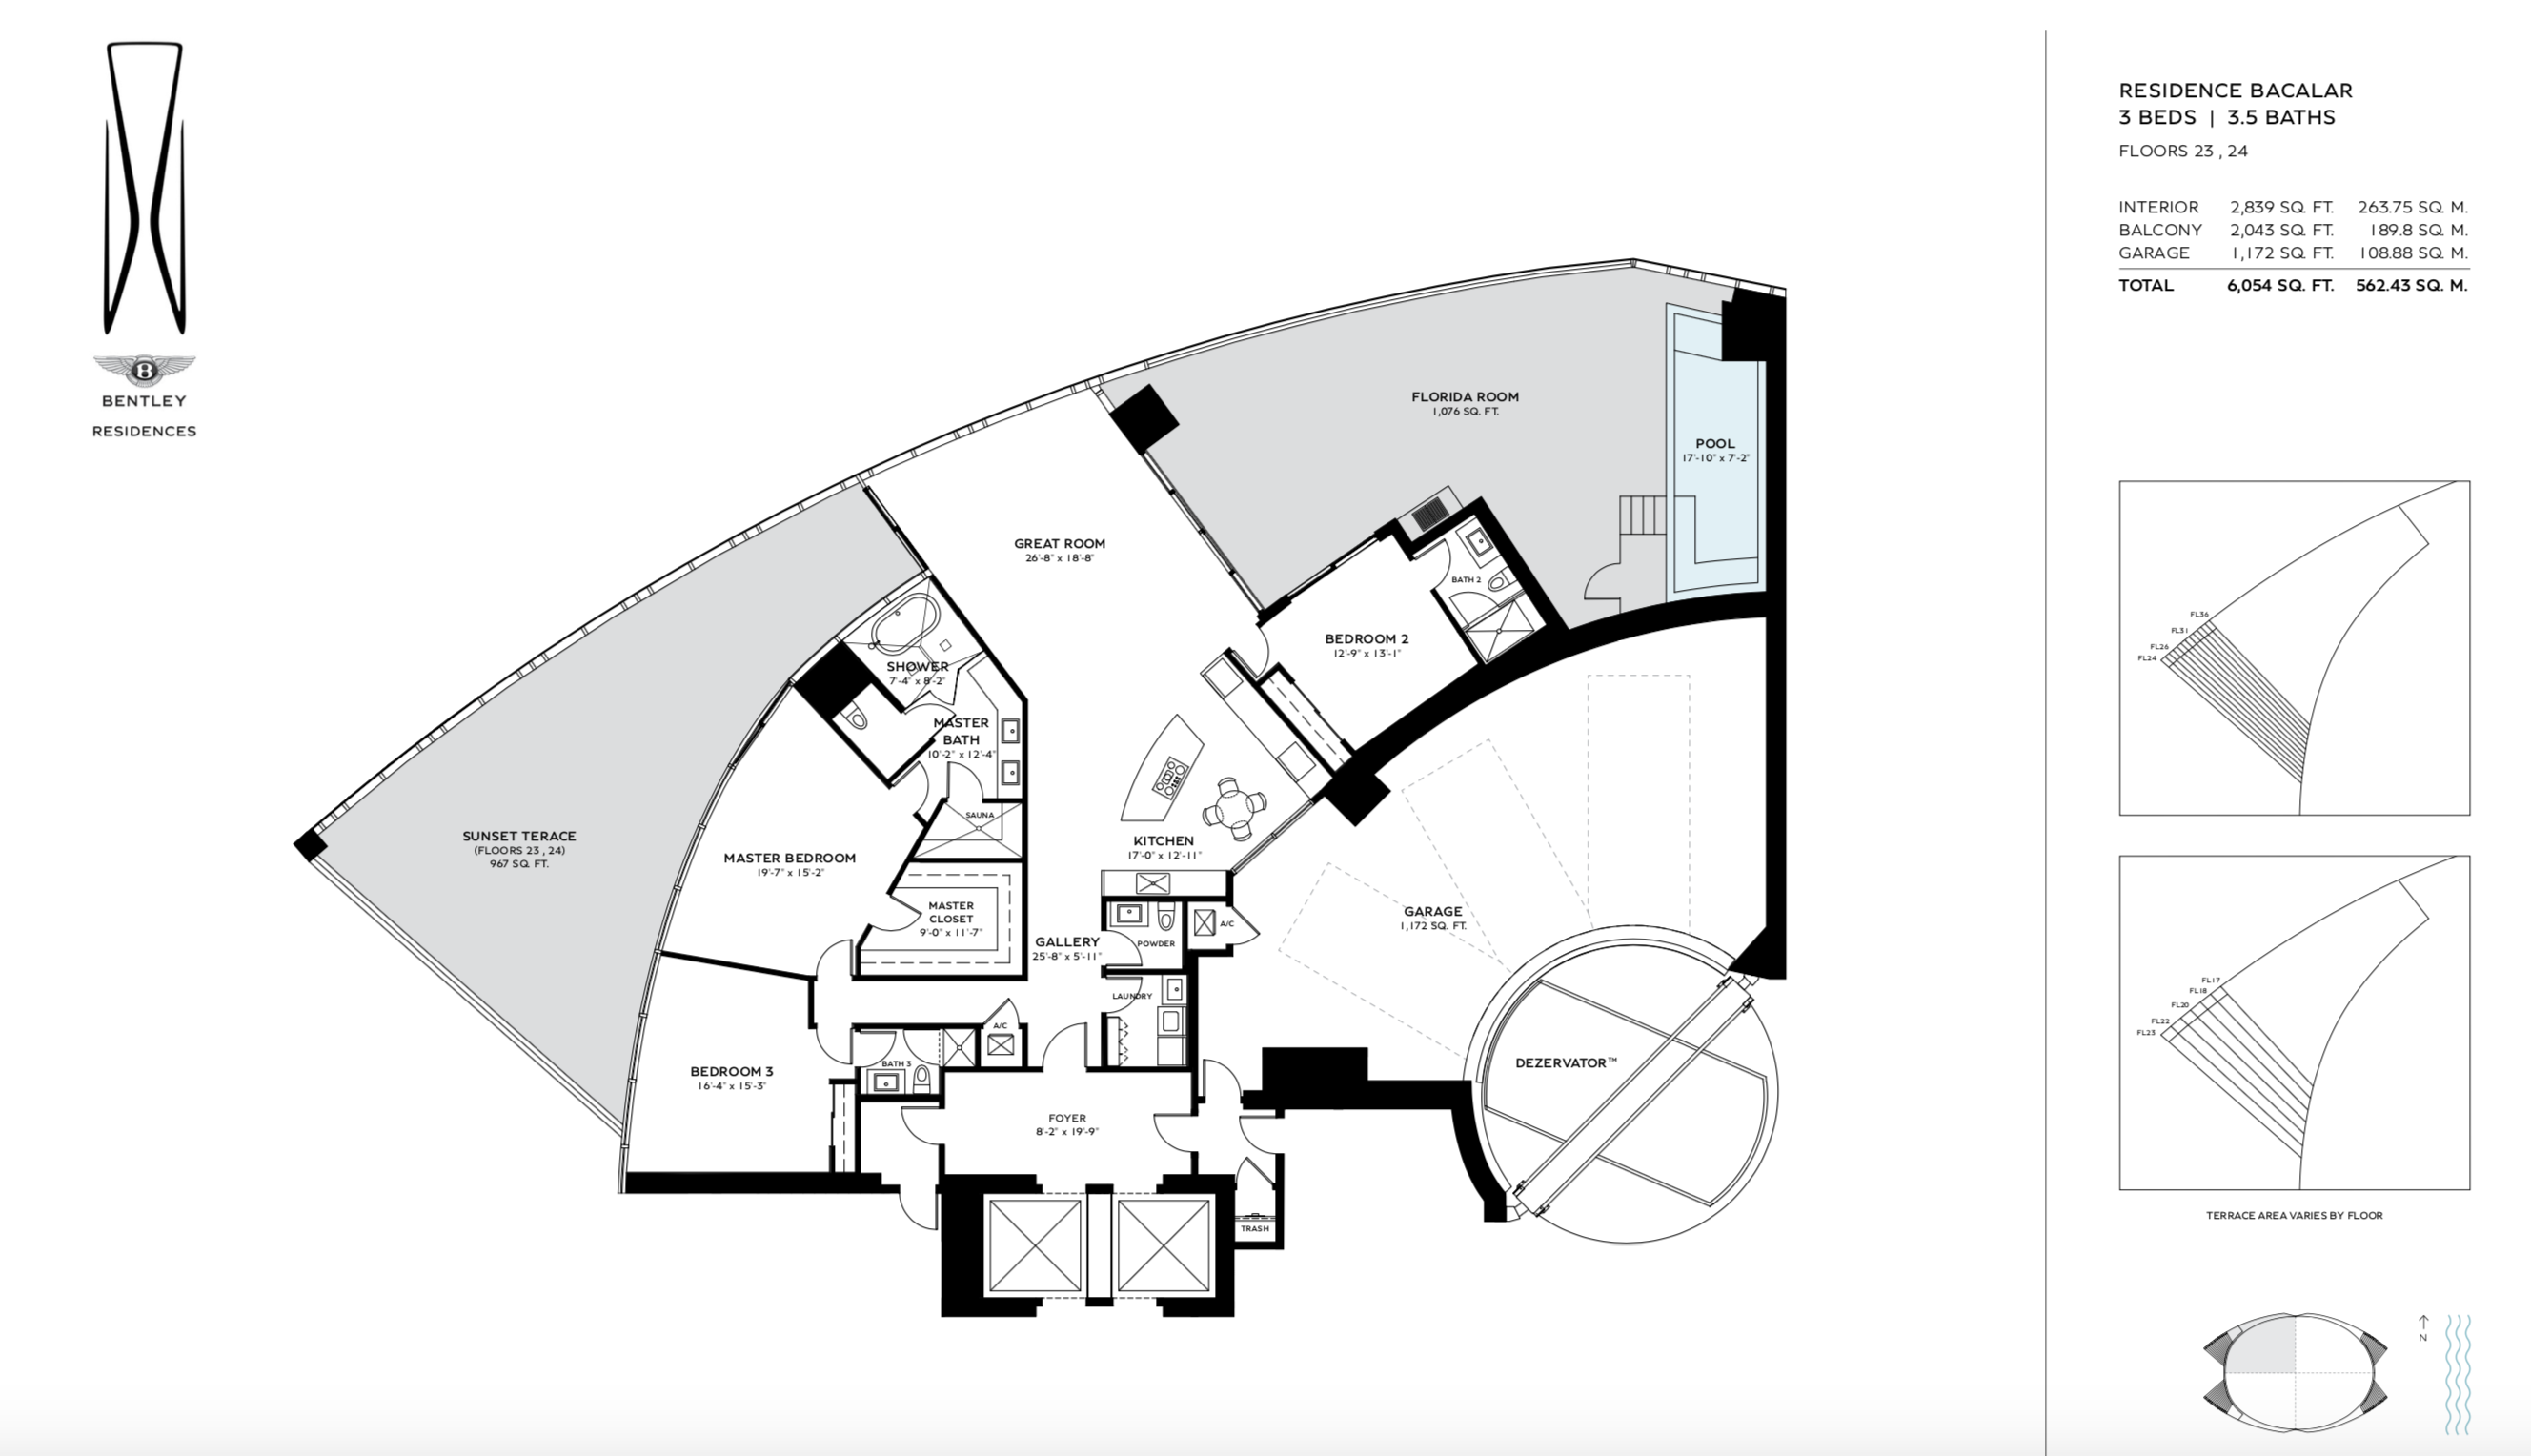 Bentley Residences Sunny Isles  | Residence Bacalar | NW Exposure | 3 Be/3.5Ba | 2,839 SF | Floors 23&24